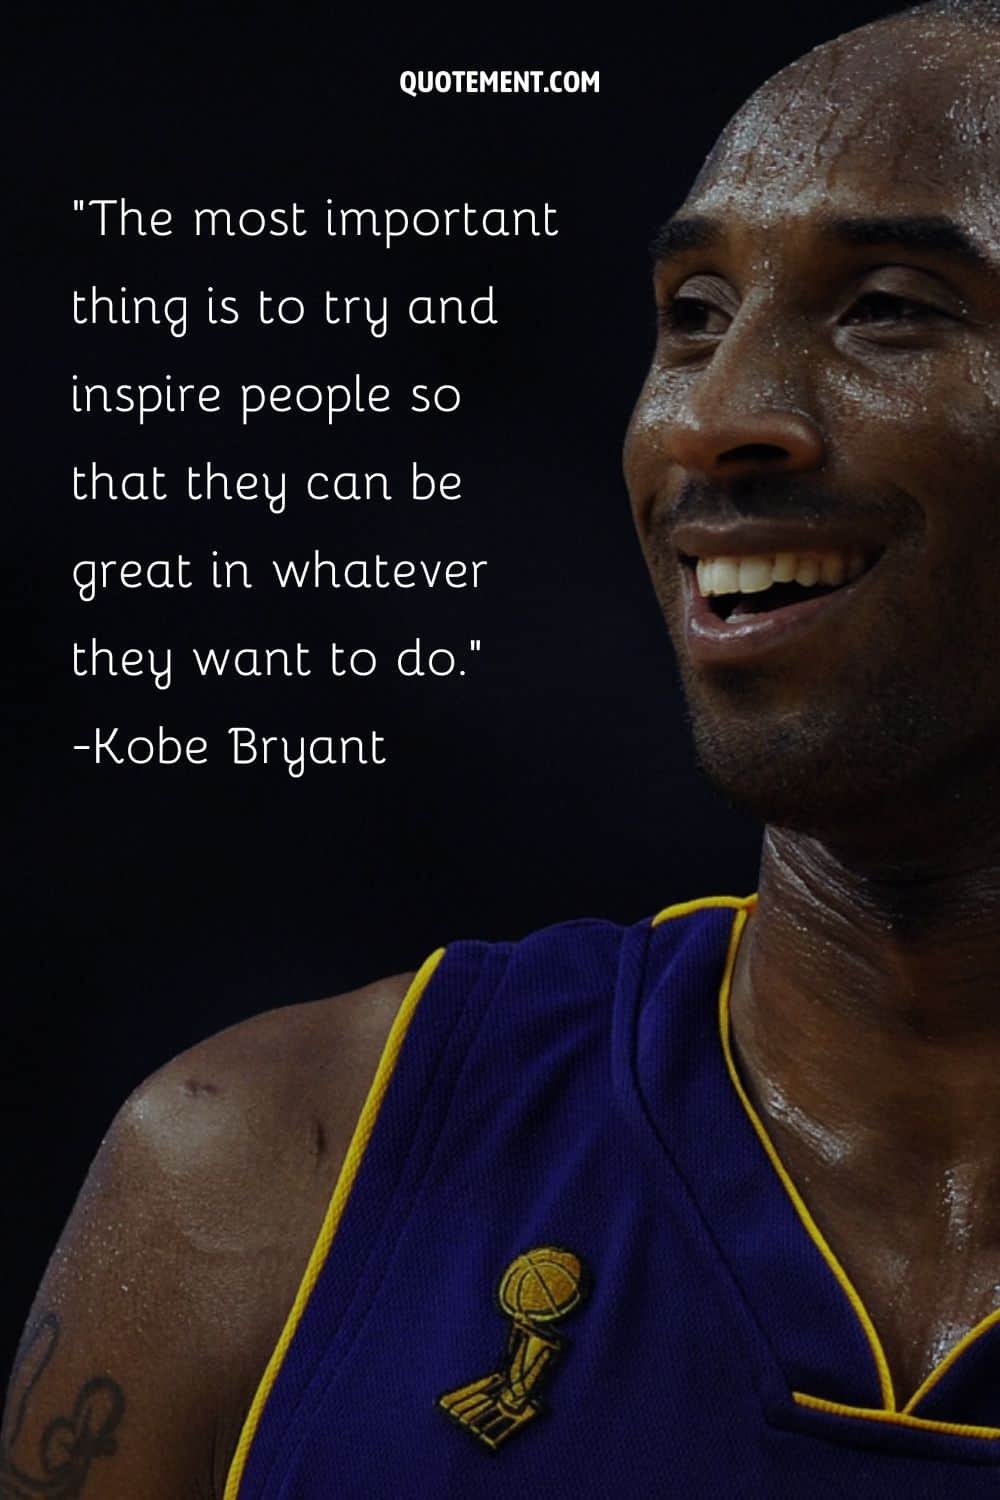 Kobe Bryant image representing basketball quote